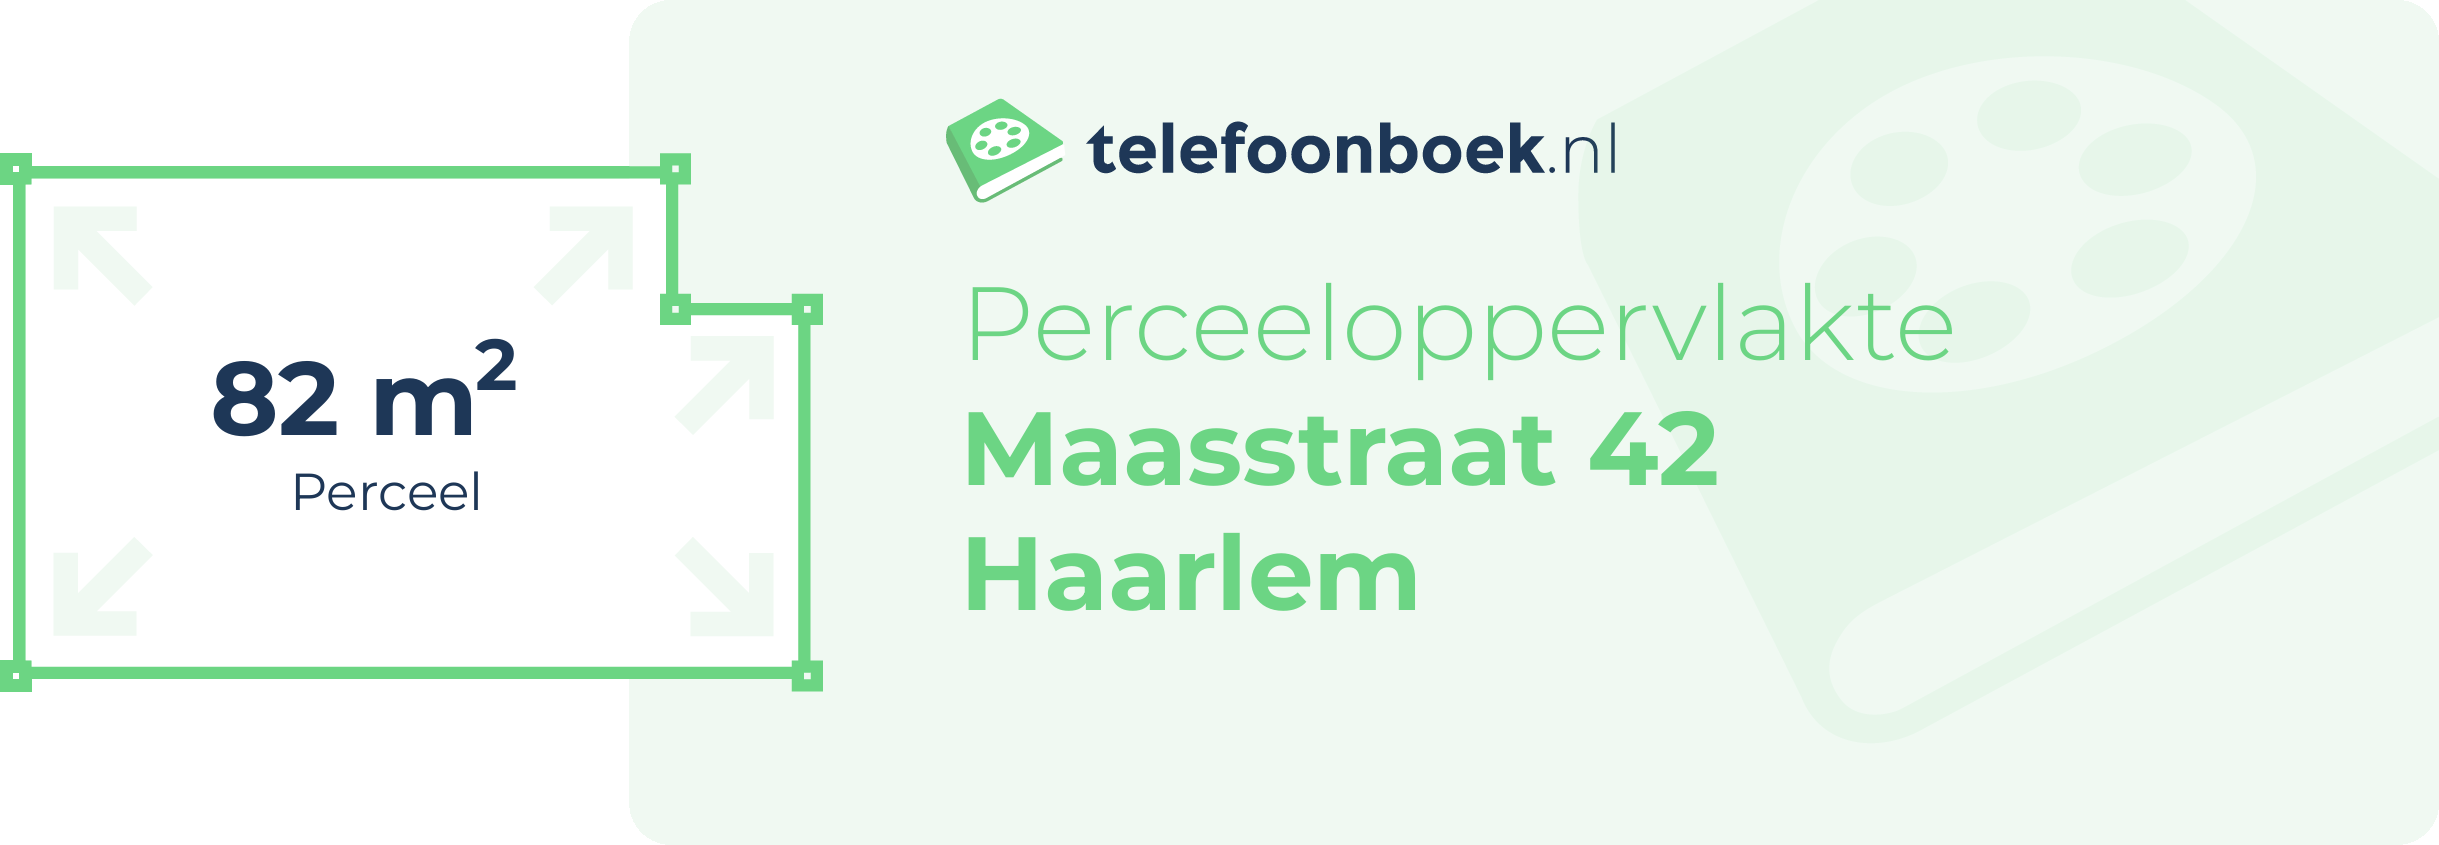 Perceeloppervlakte Maasstraat 42 Haarlem